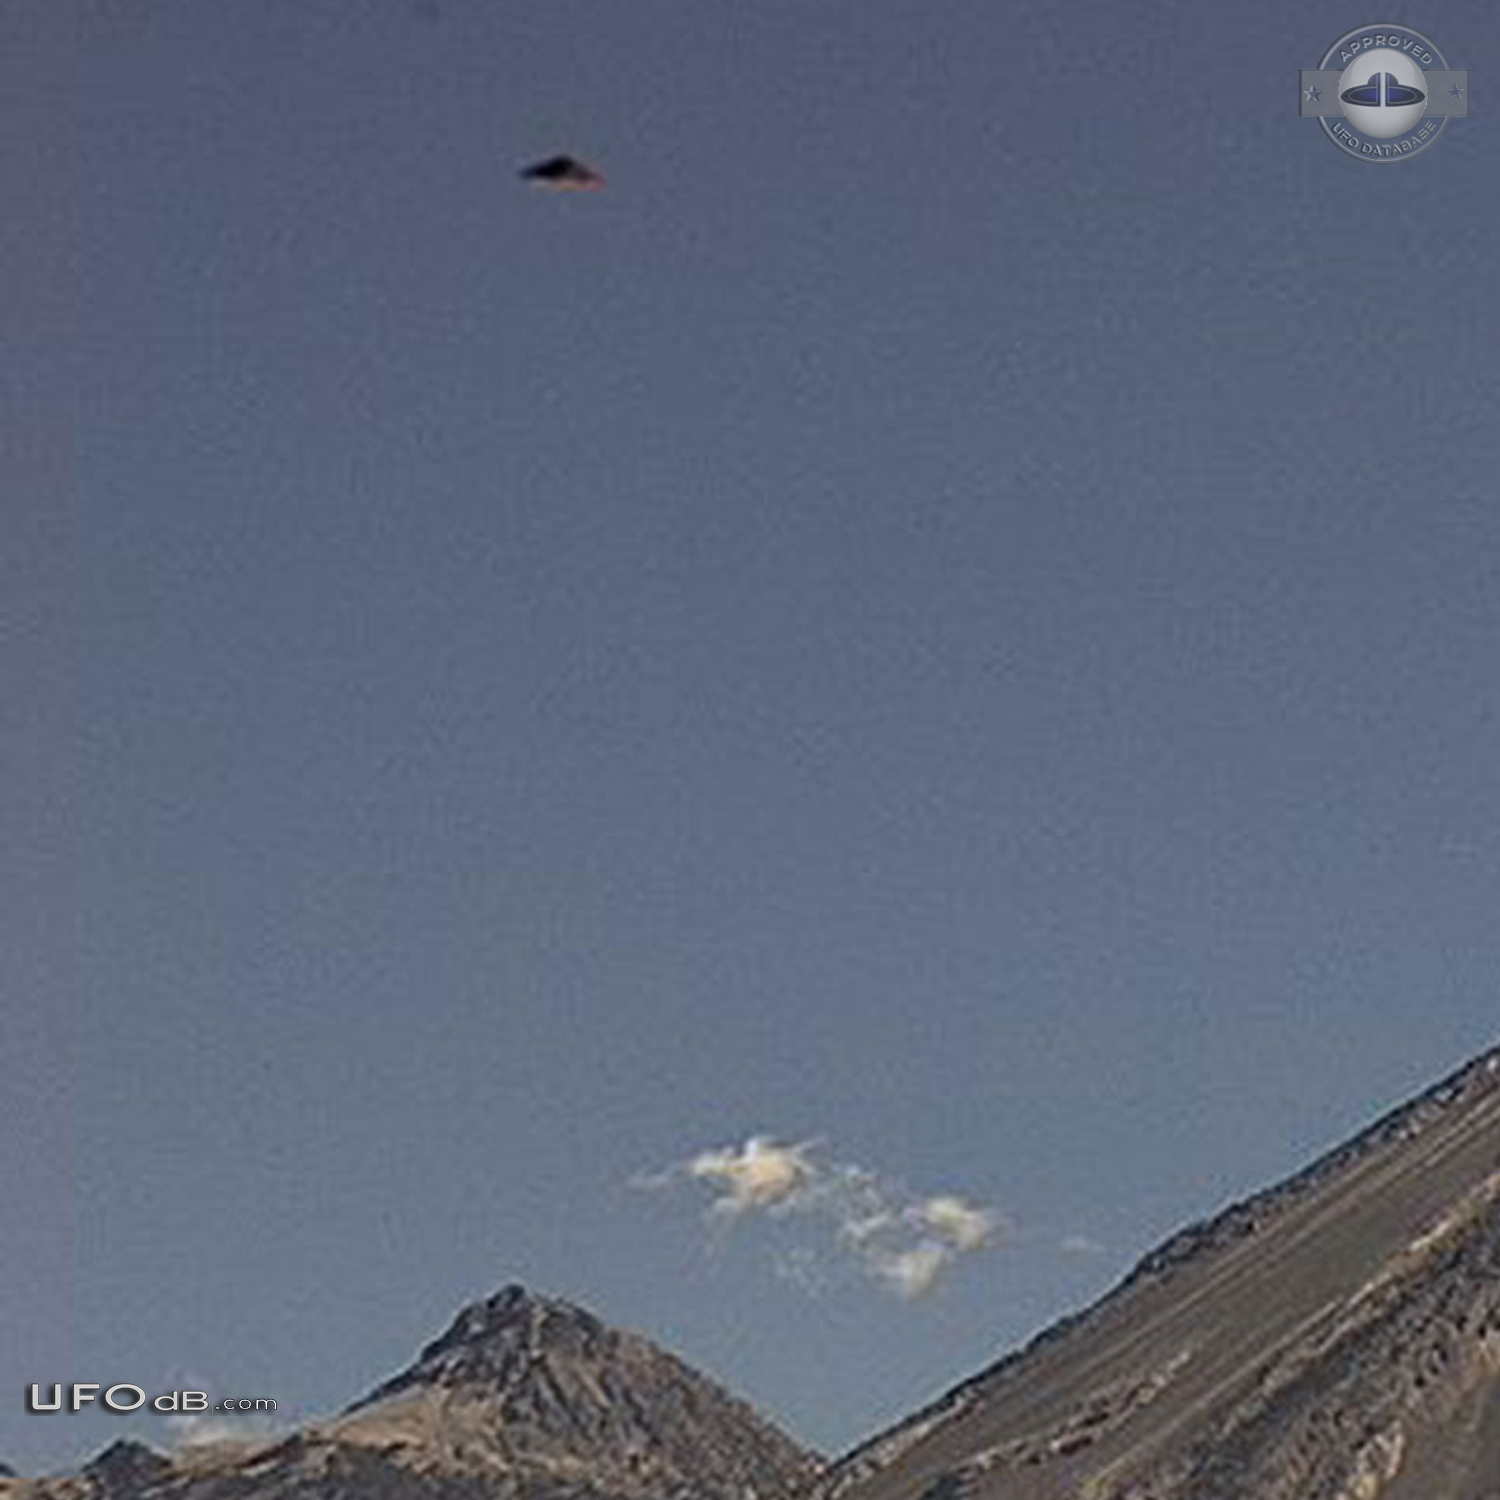 UFO caught on Volcan de Colima Webcam in Mexico - March 2015 UFO Picture #665-2